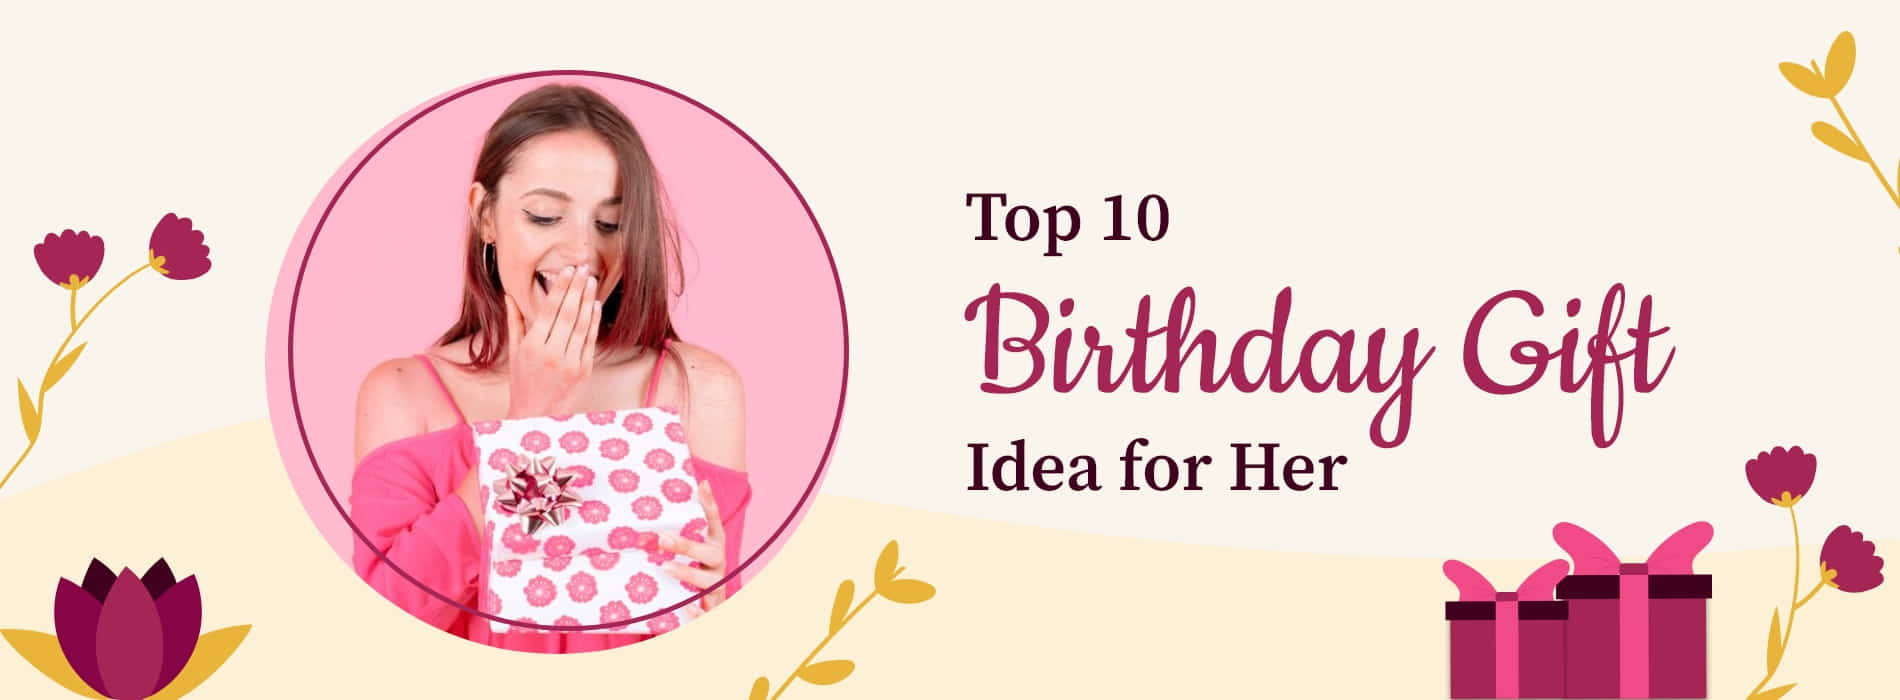 Birthday-gift-idea-for-her-viraasi